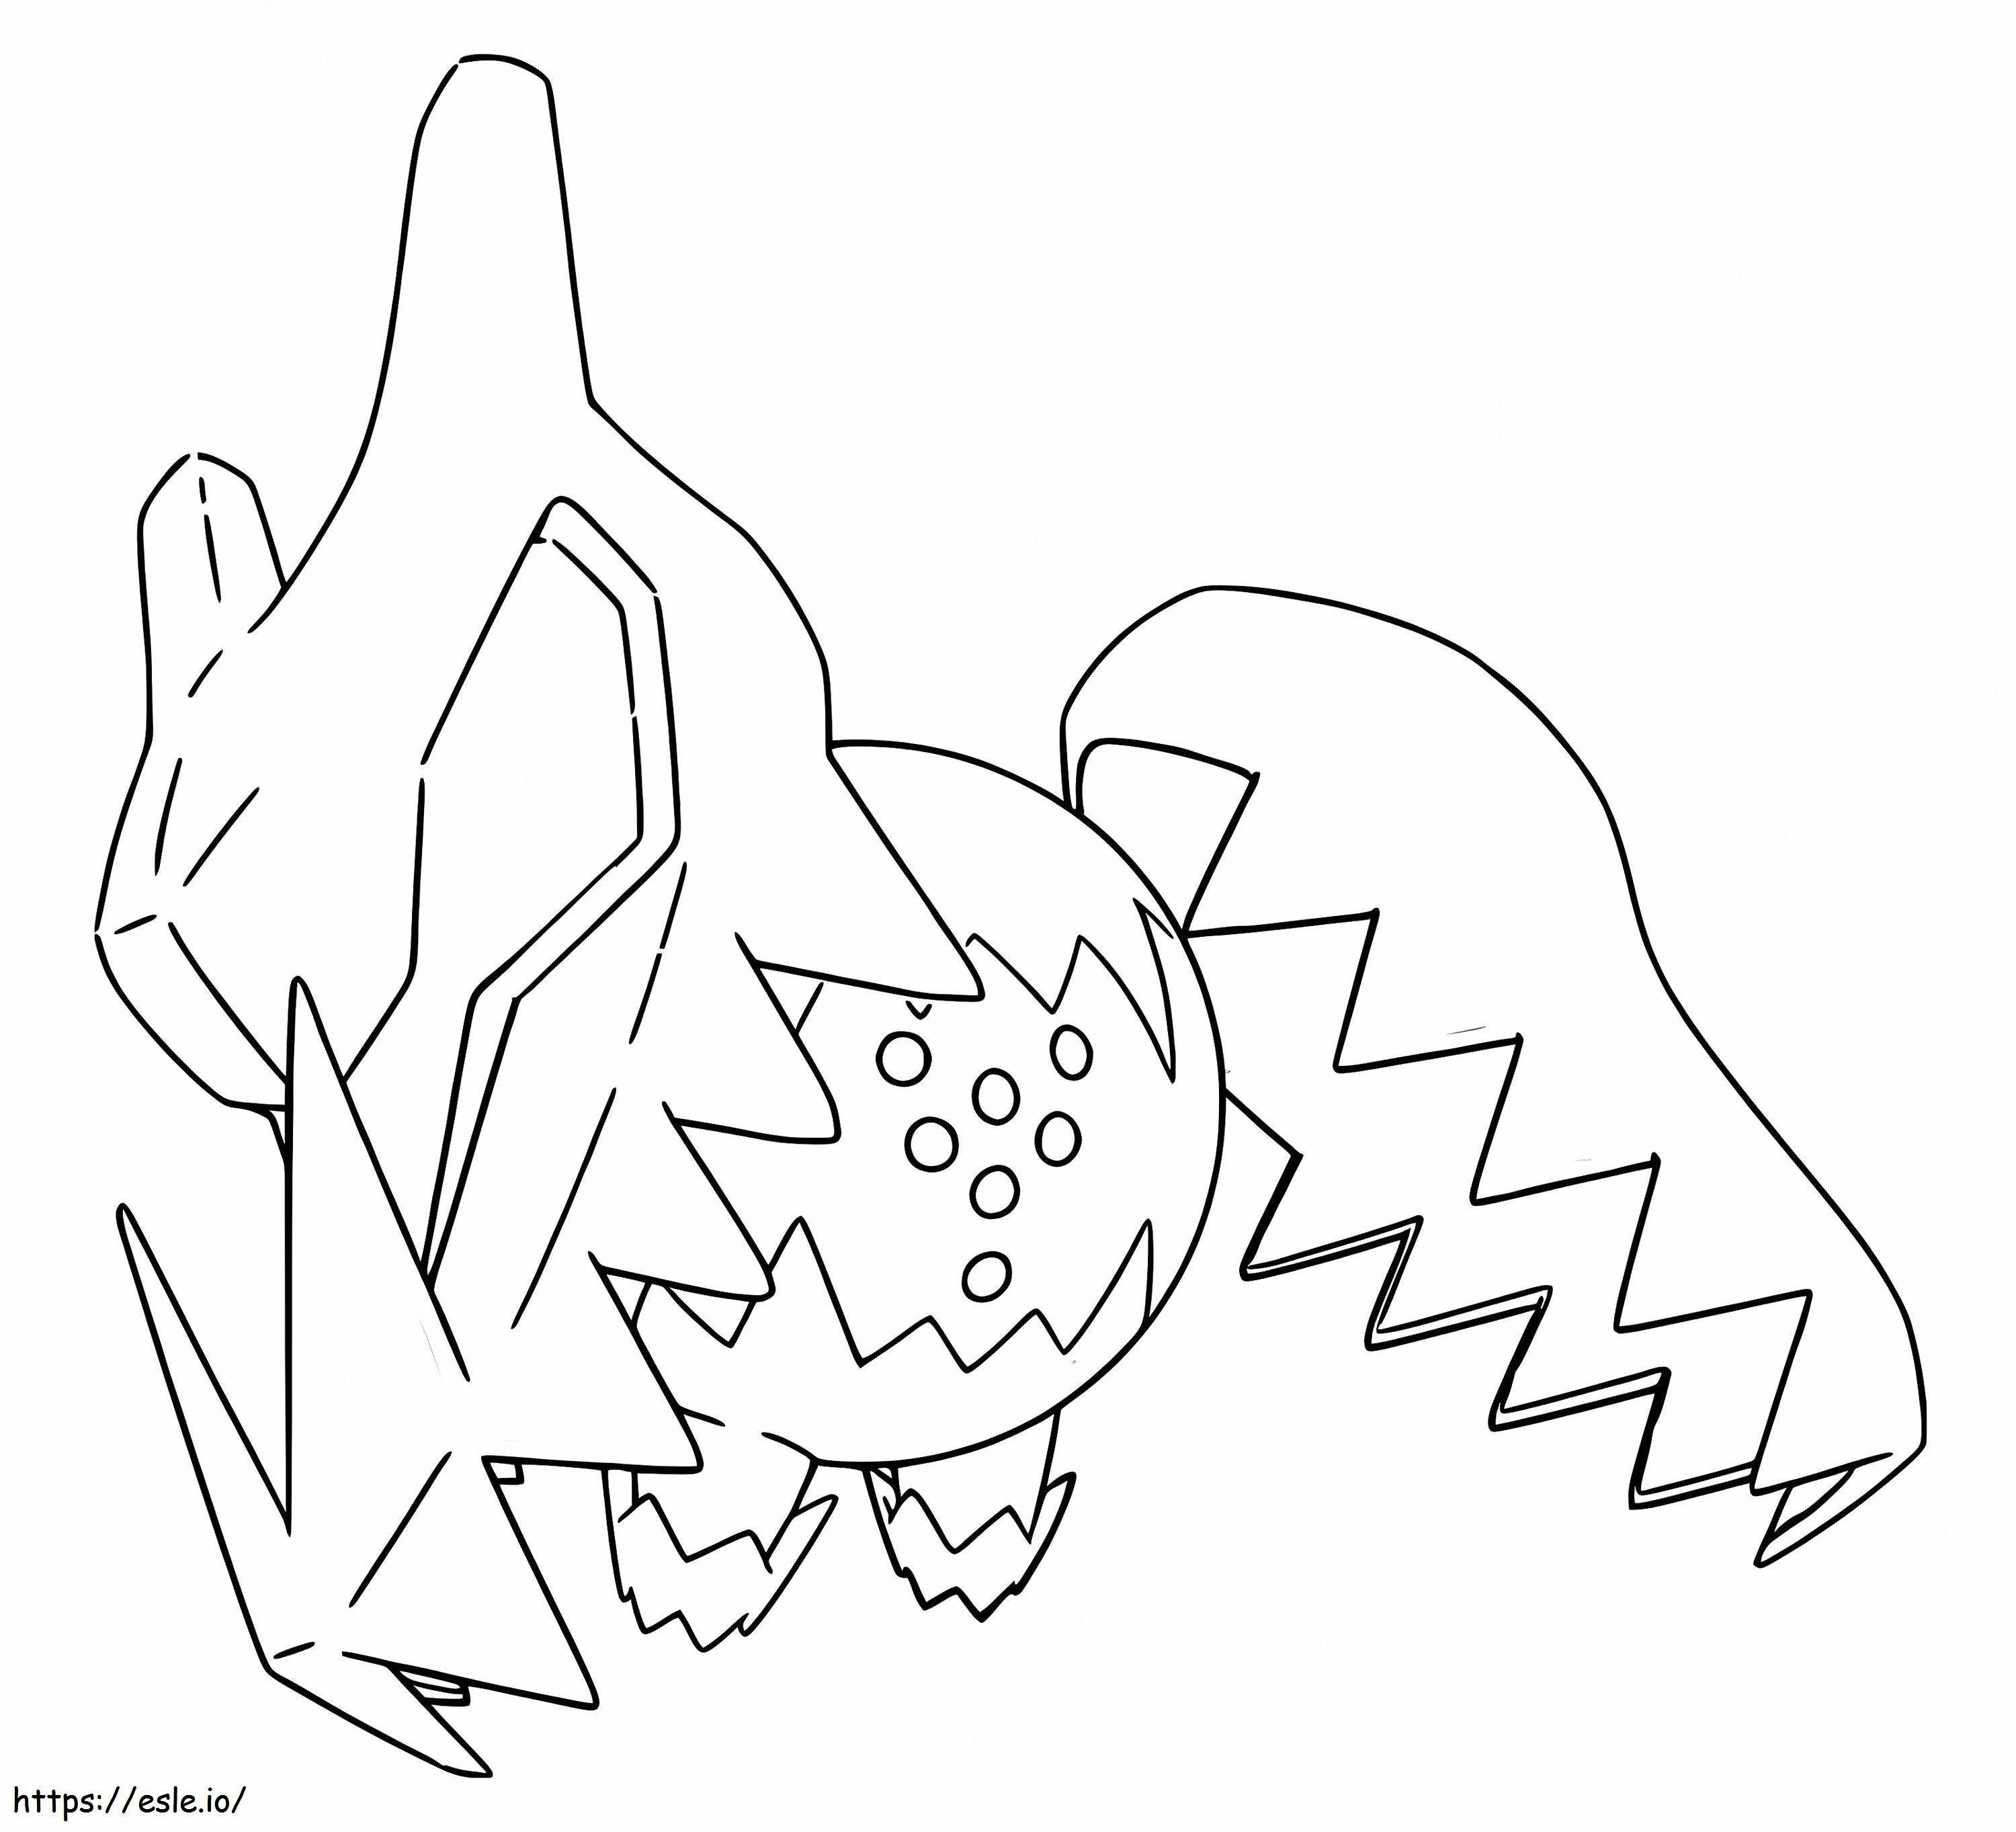 Regidrago-Pokémon ausmalbilder